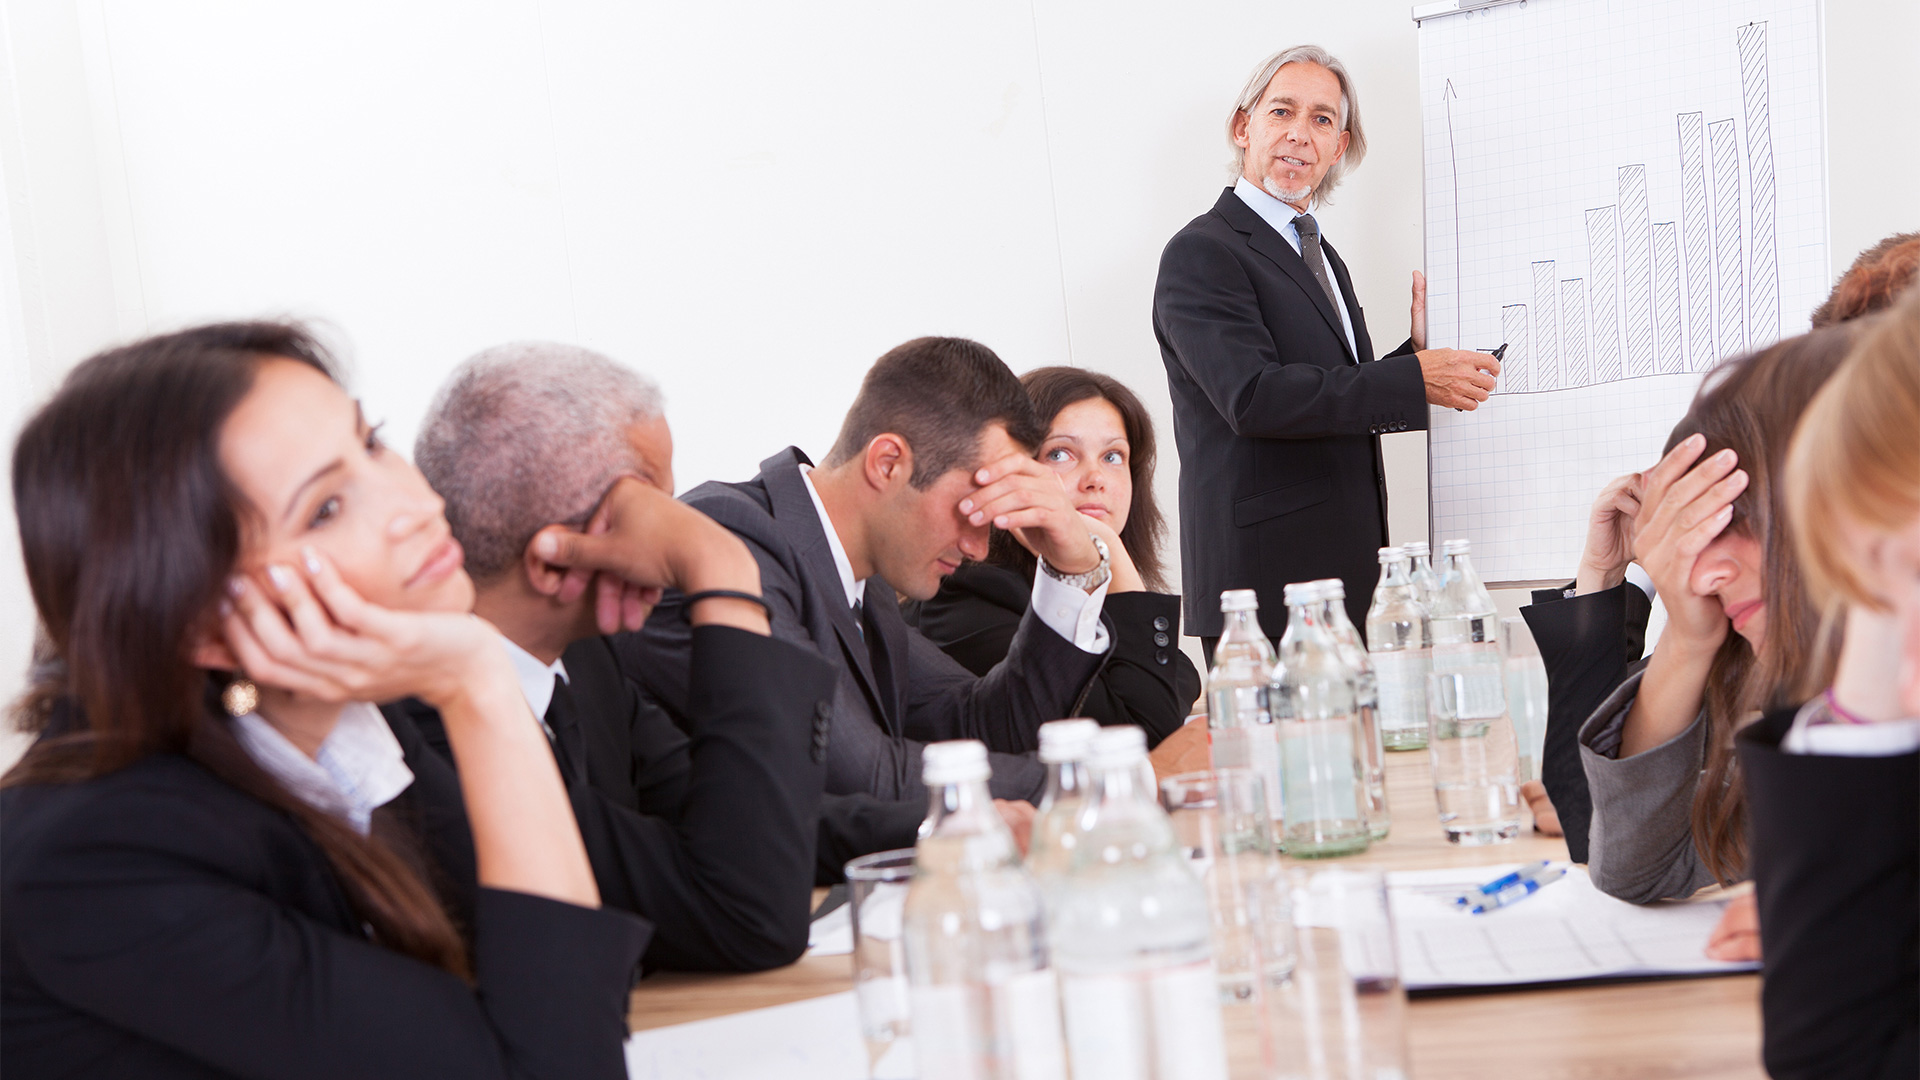 How To Avoid Tedious Meetings